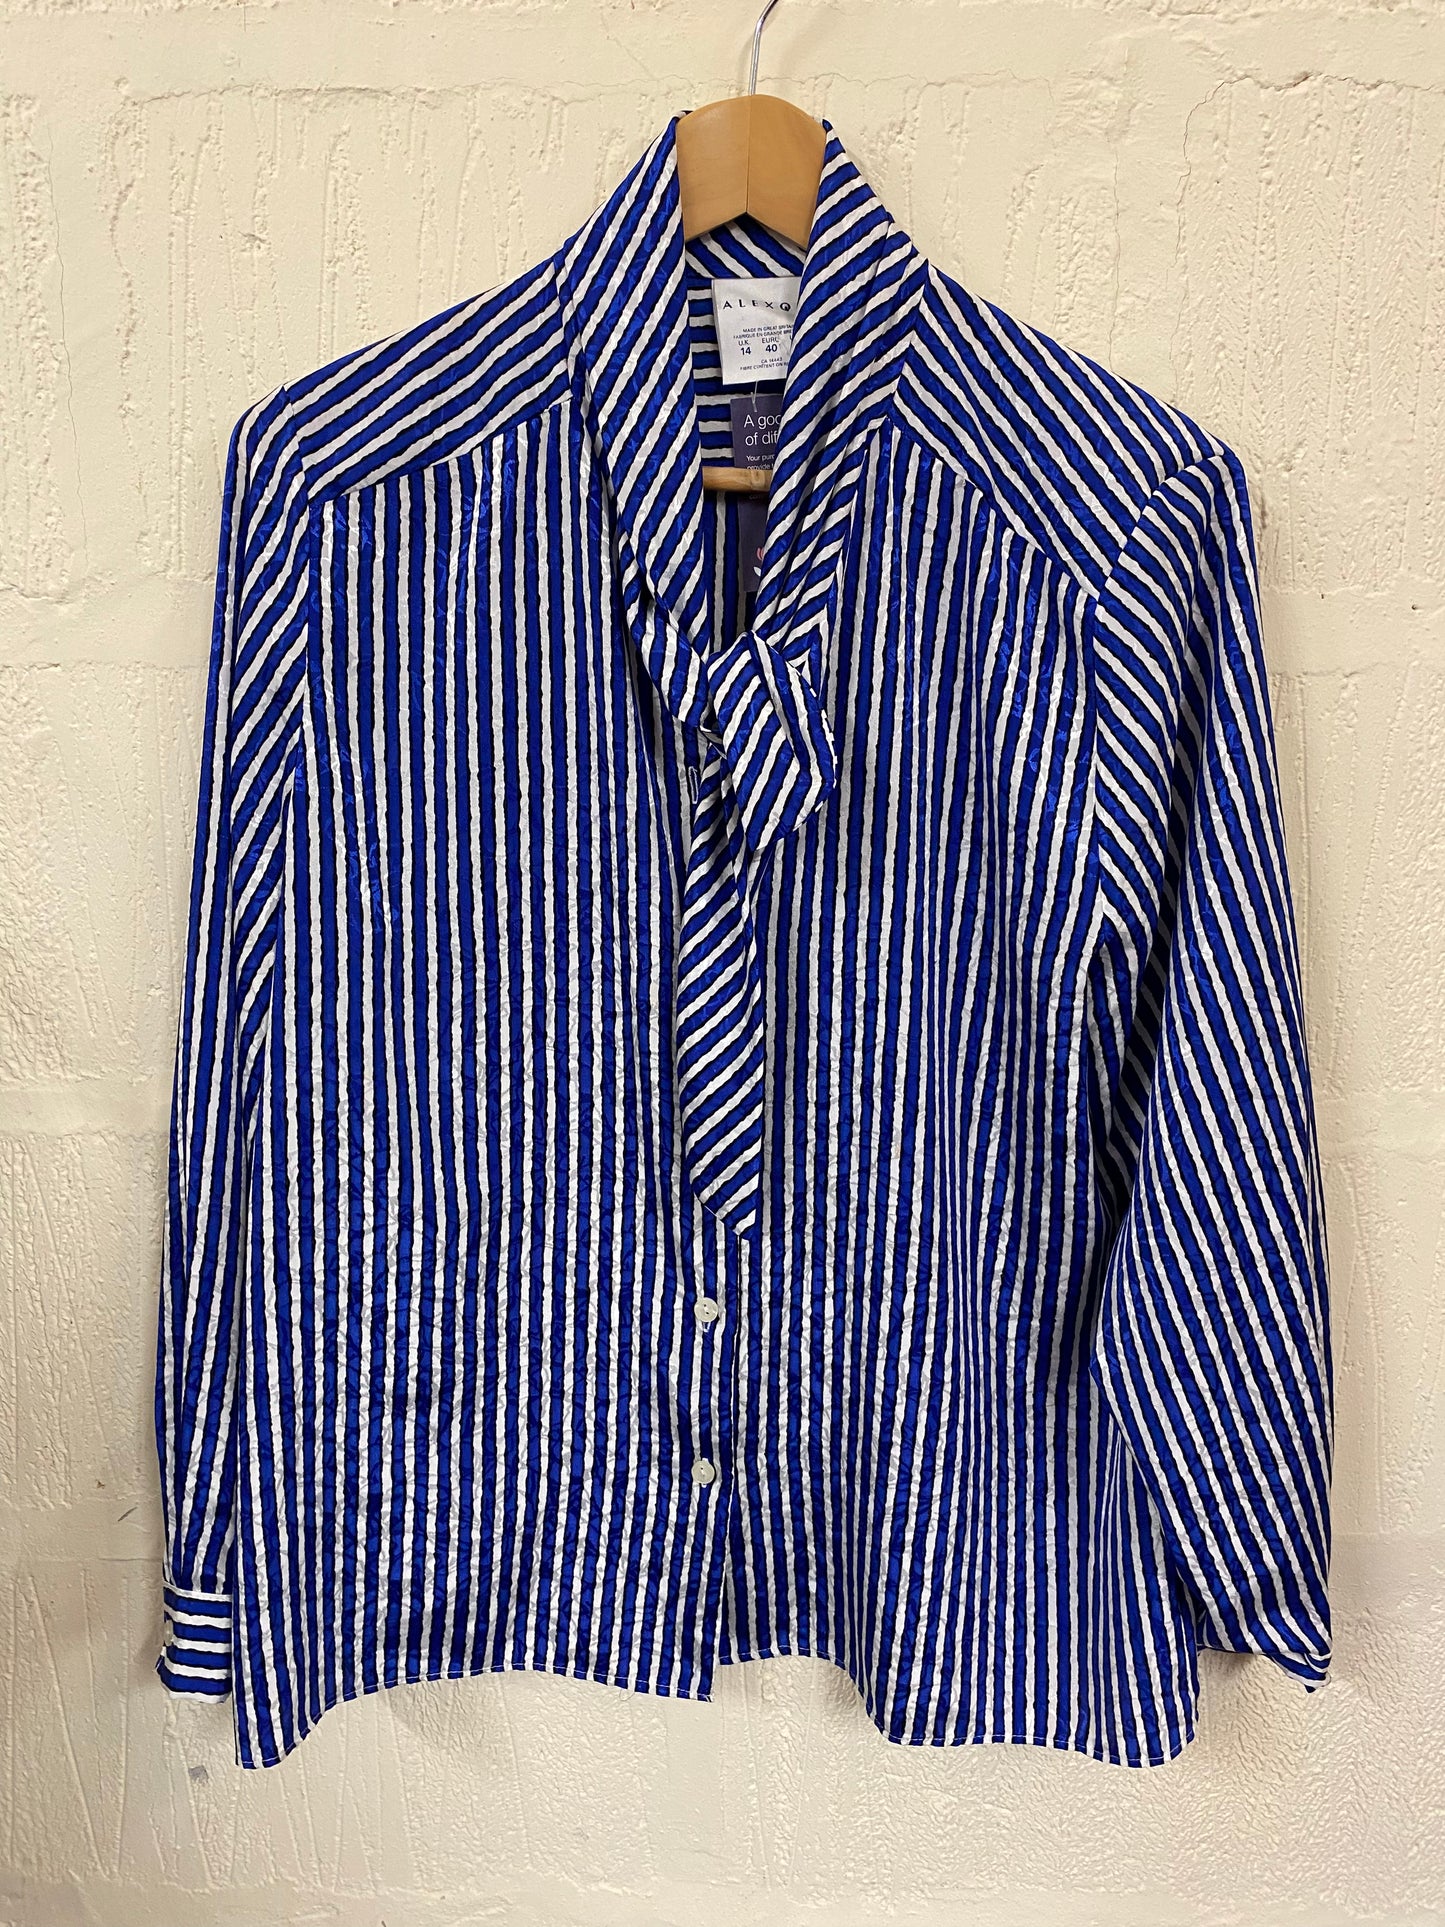 Vintage Blue Striped Shirt Size 12